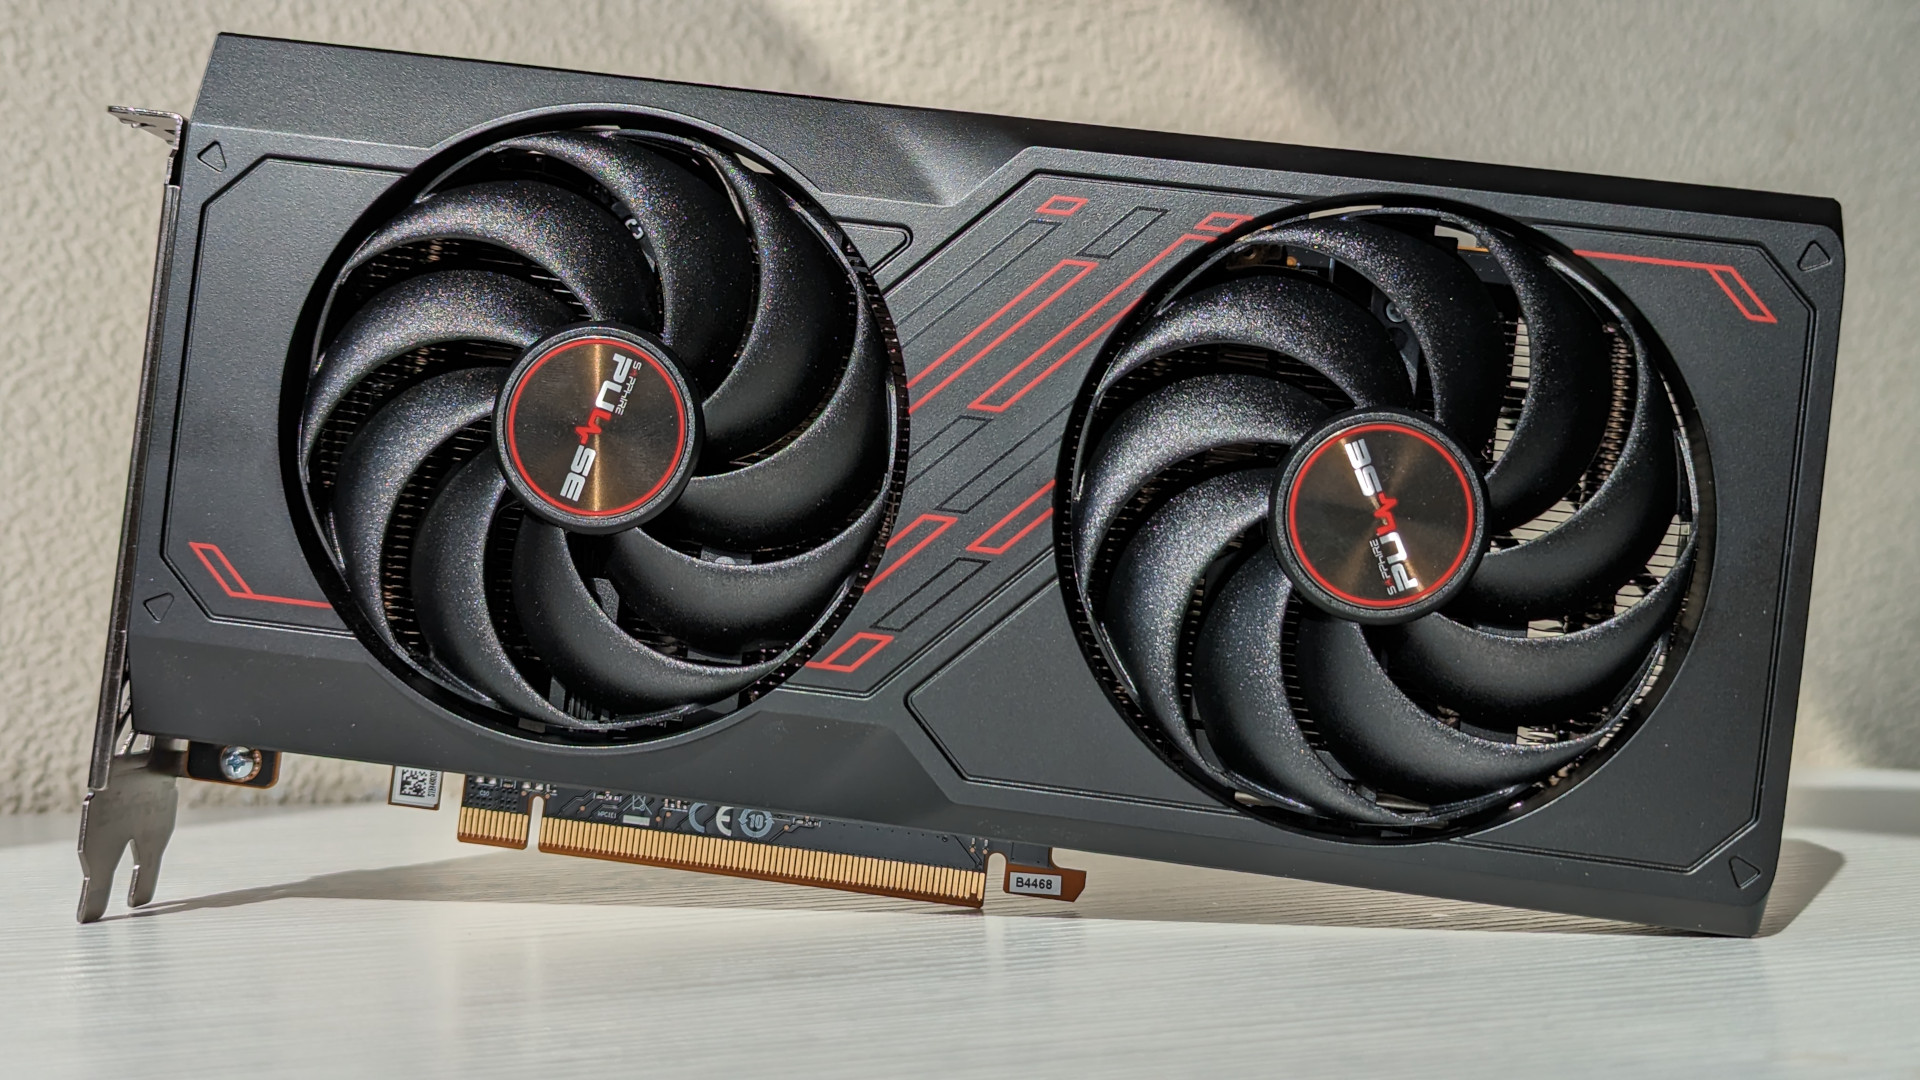 AMD Radeon RX 7600: Where to buy, Price & specifications - Dexerto